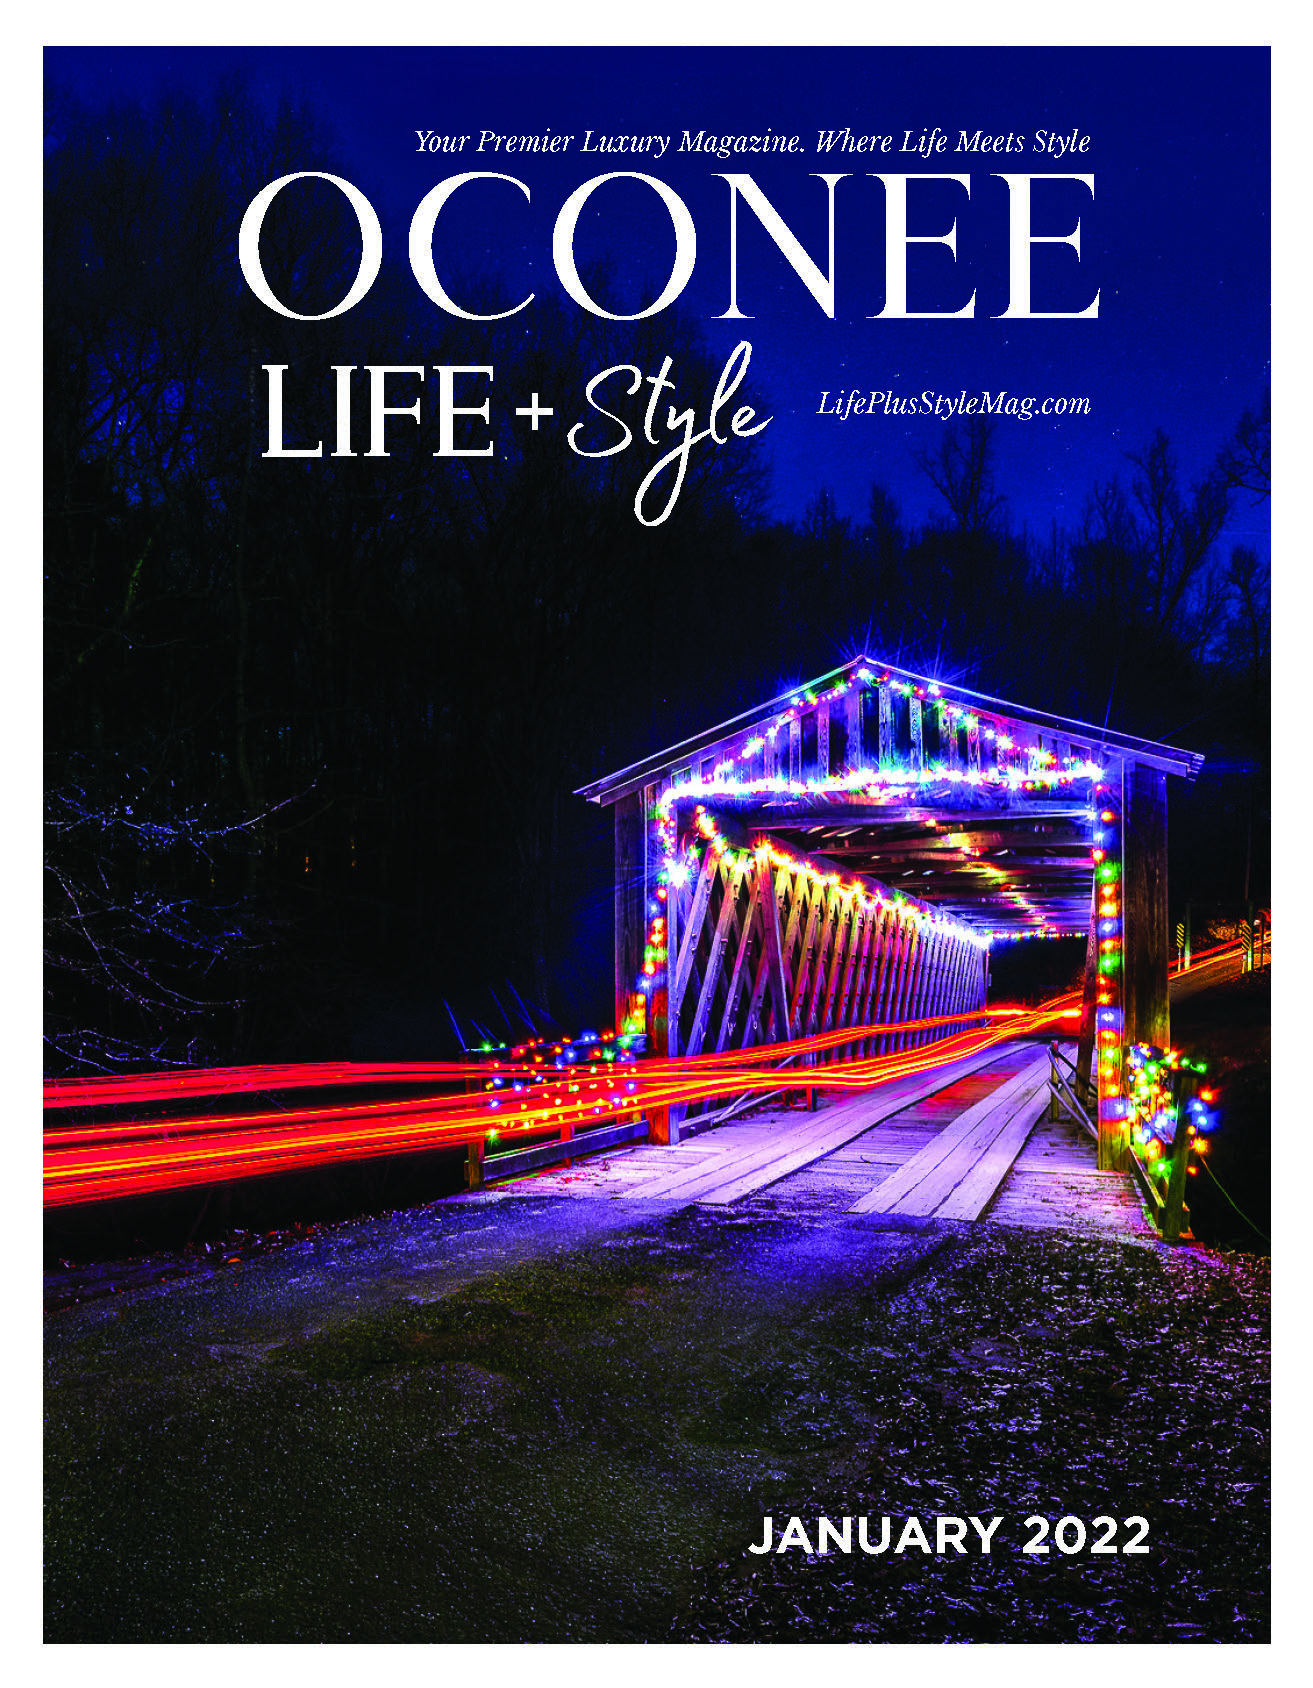 Oconess Life Plus Style Magazine January 2022 Issue